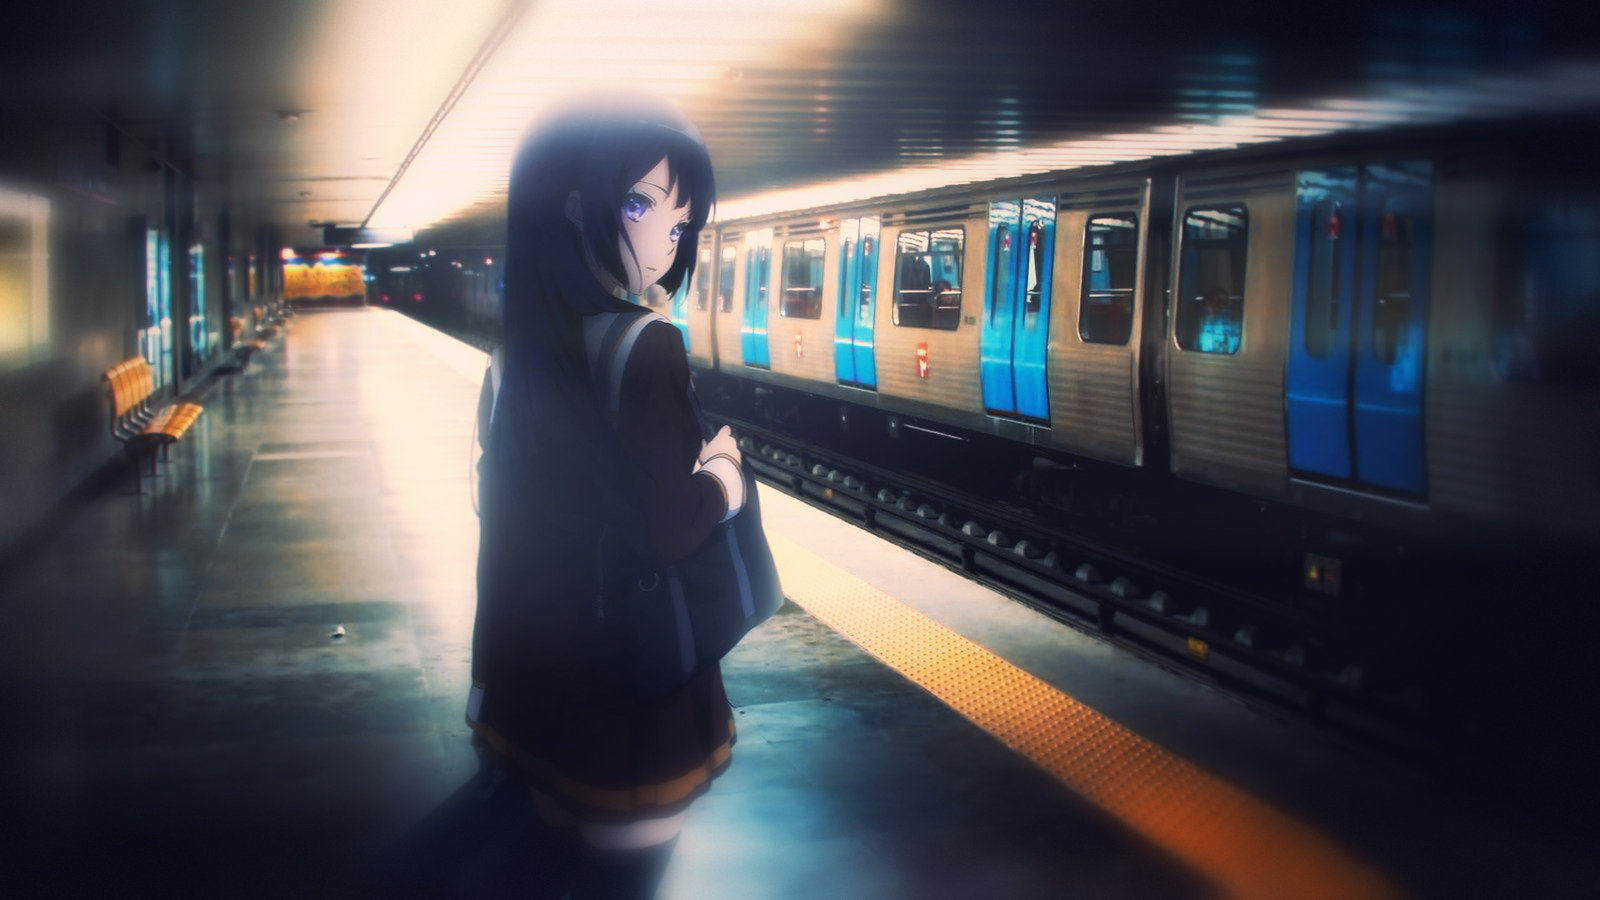 Anime 1600x900 anime girls subway school uniform illustration blurred motion blur city animeirl